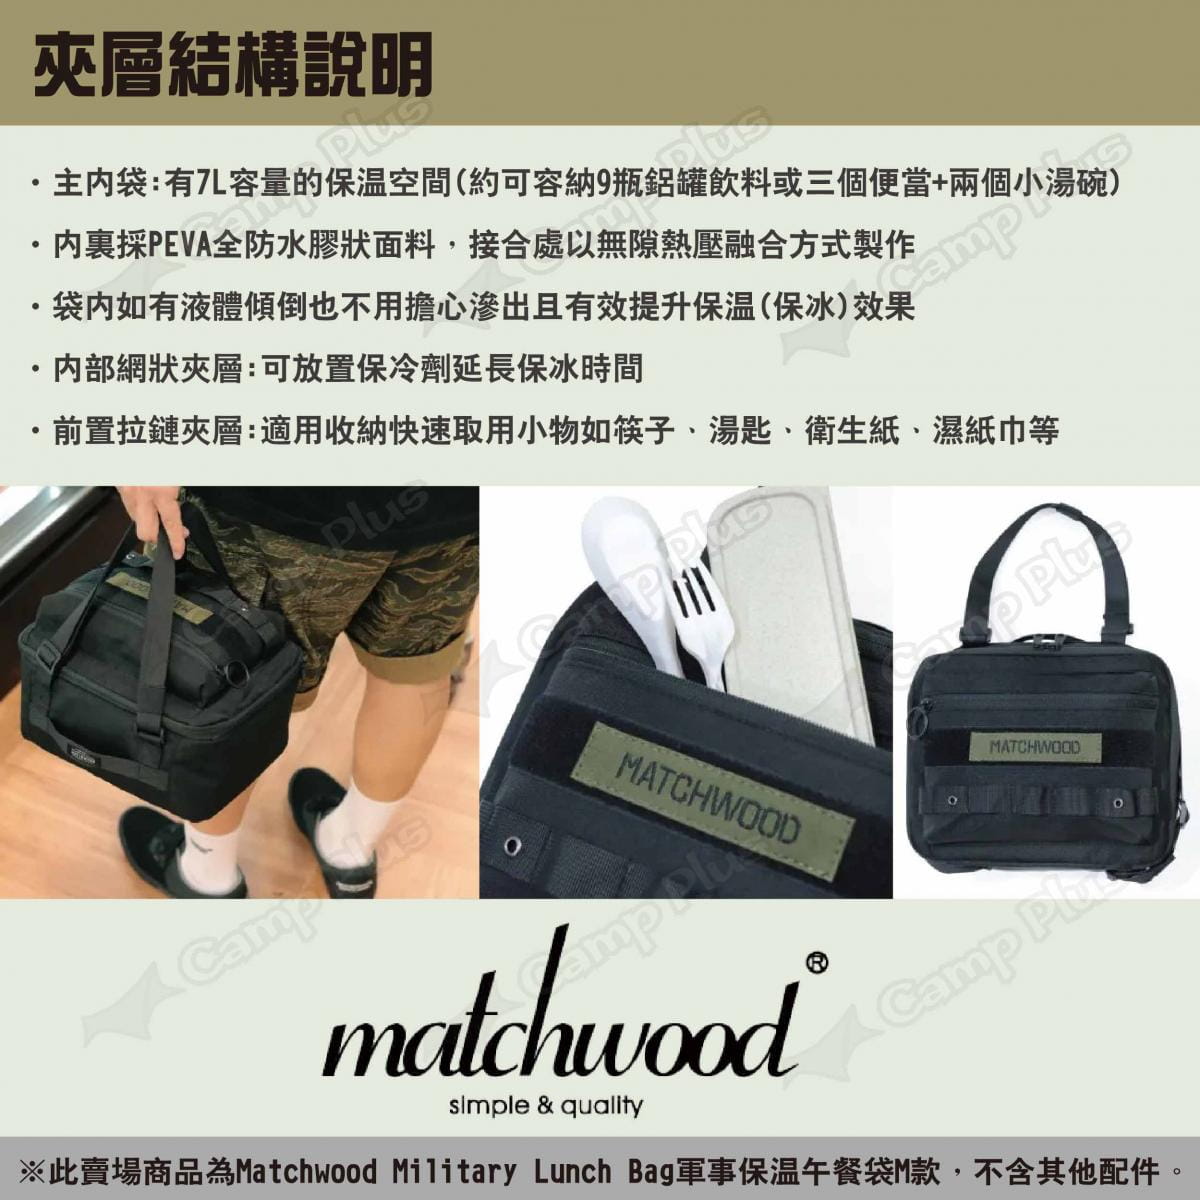 【Matchwood】Military Lunch Bag軍事保溫午餐袋-M款 悠遊戶外 5